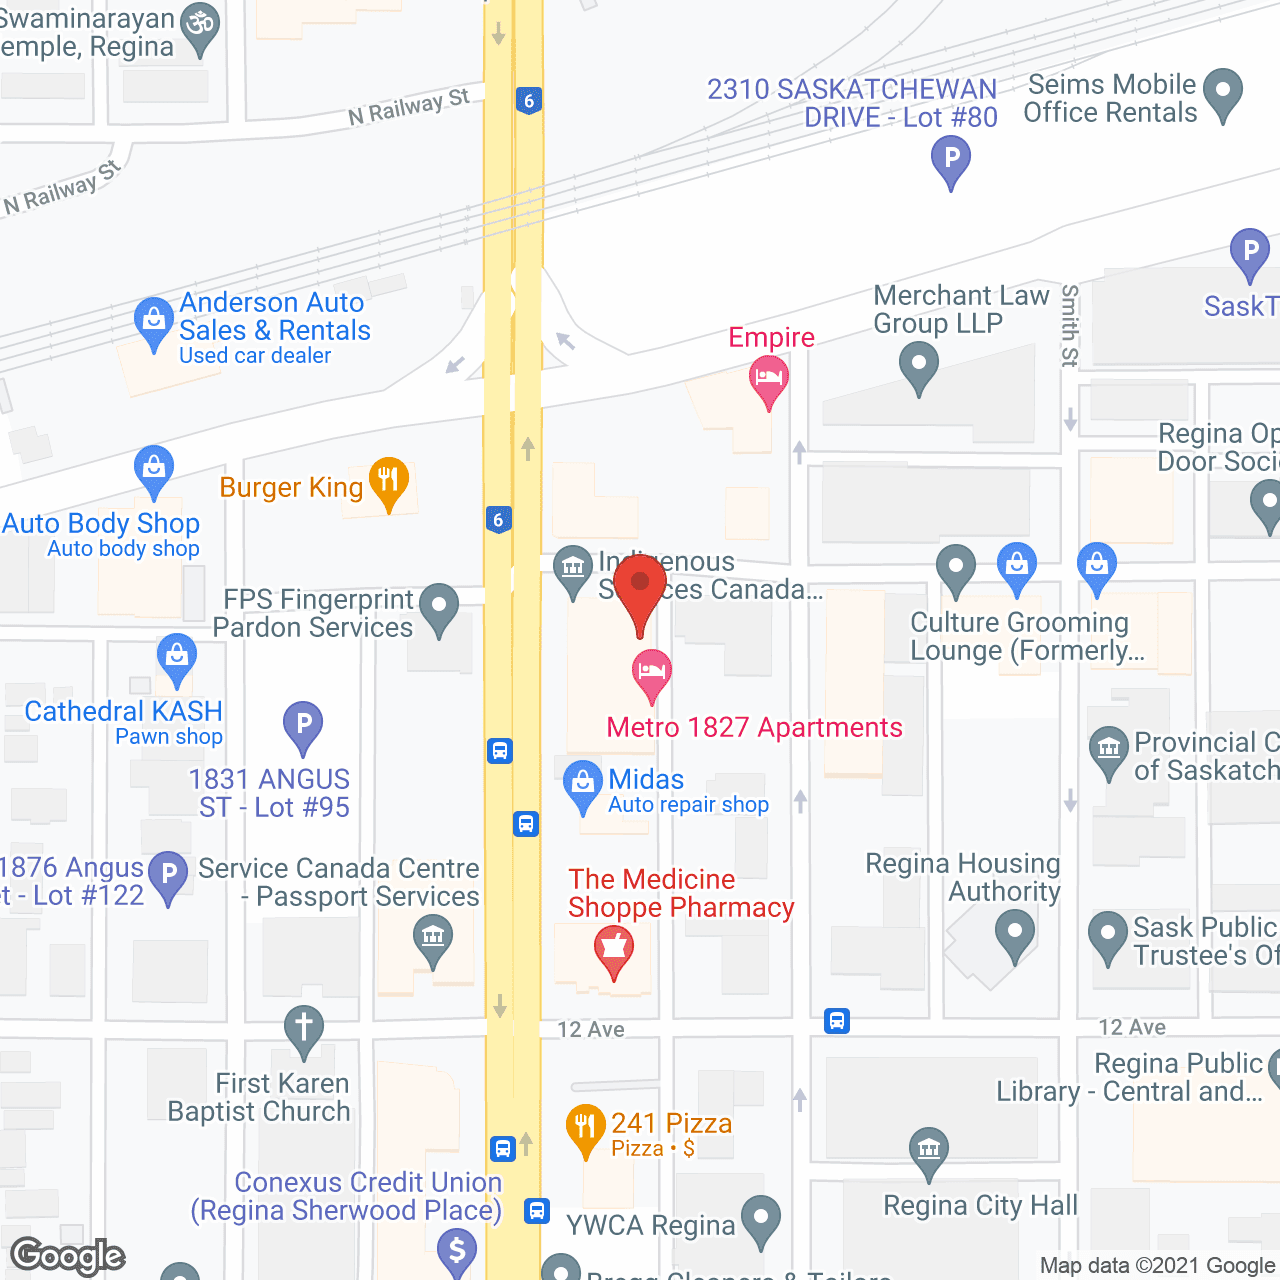 Metro 1827 in google map